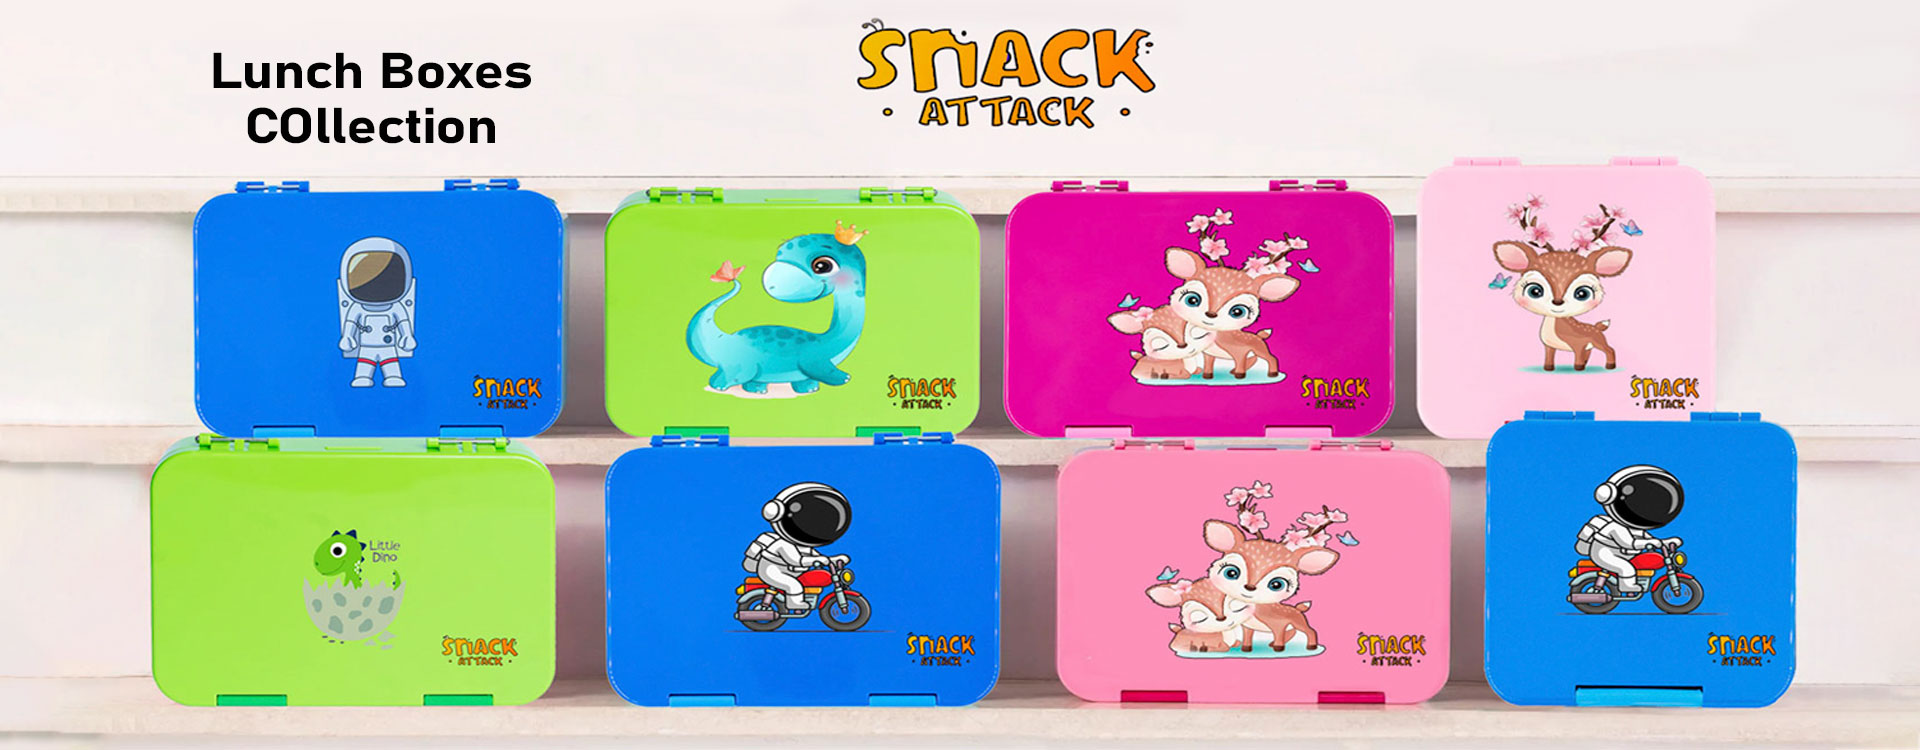 Snack Attack Premium Lunch Boxes –